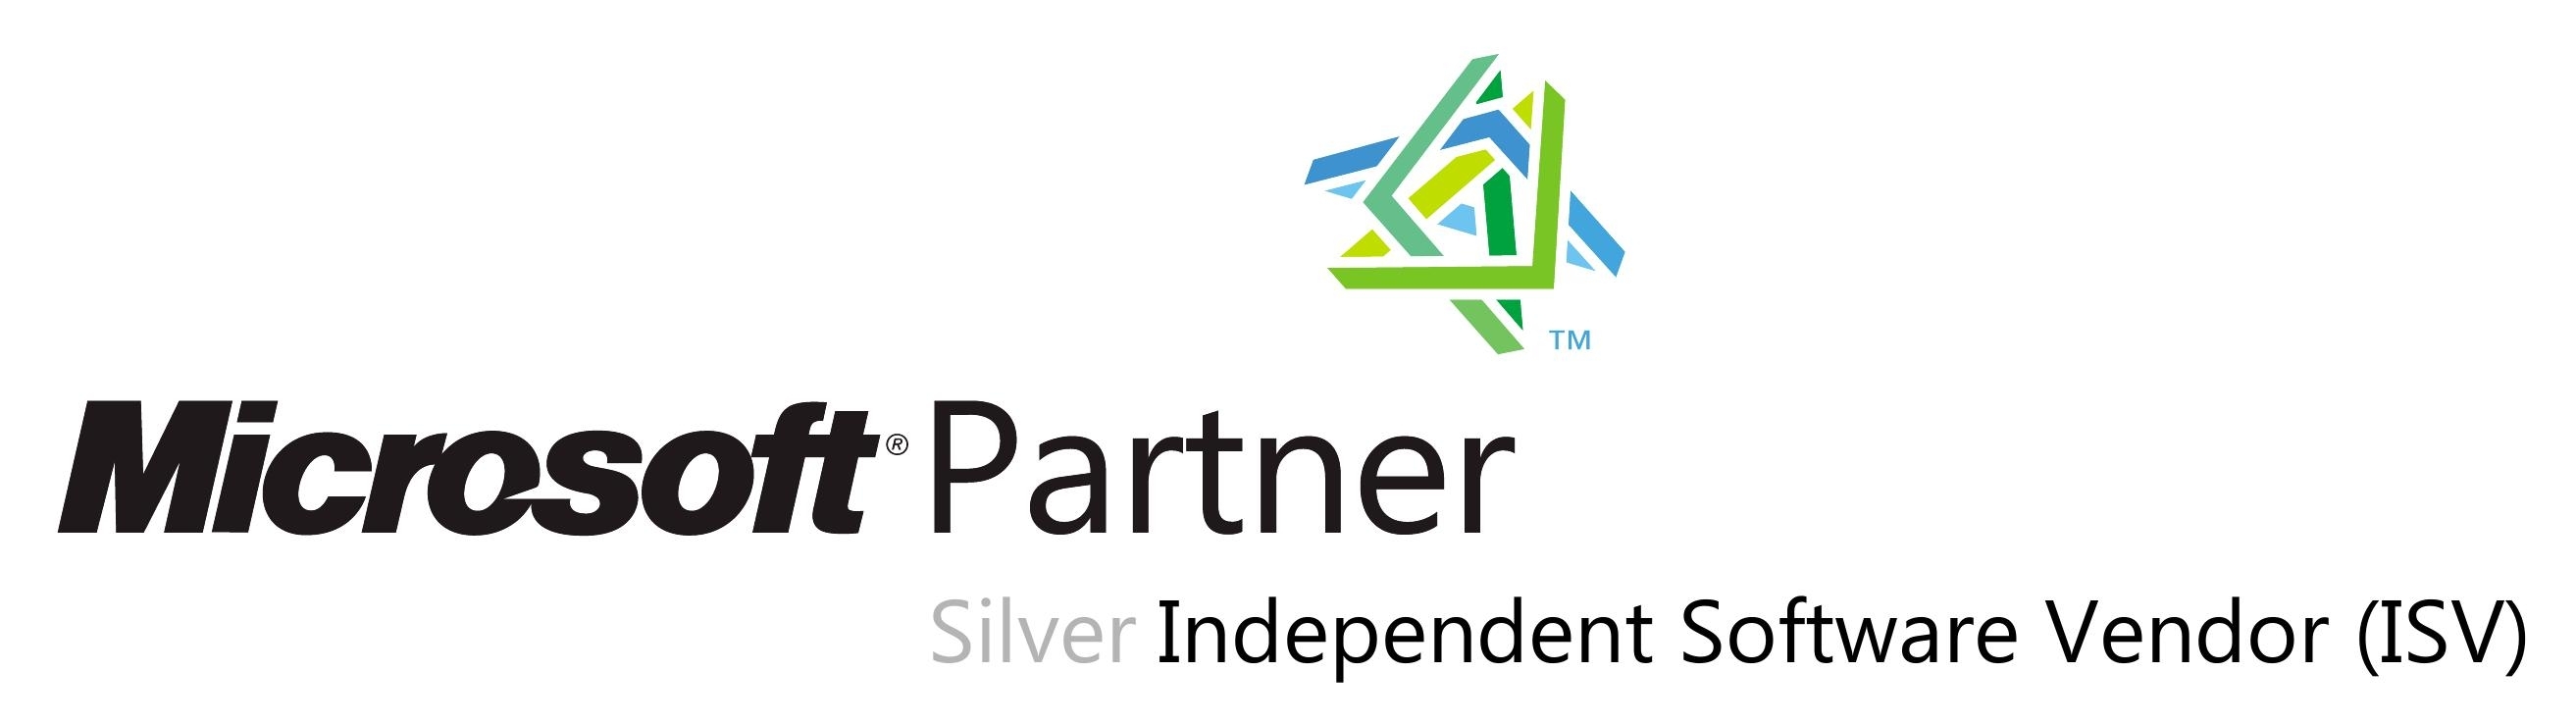 Microsoft Partner Program Logo